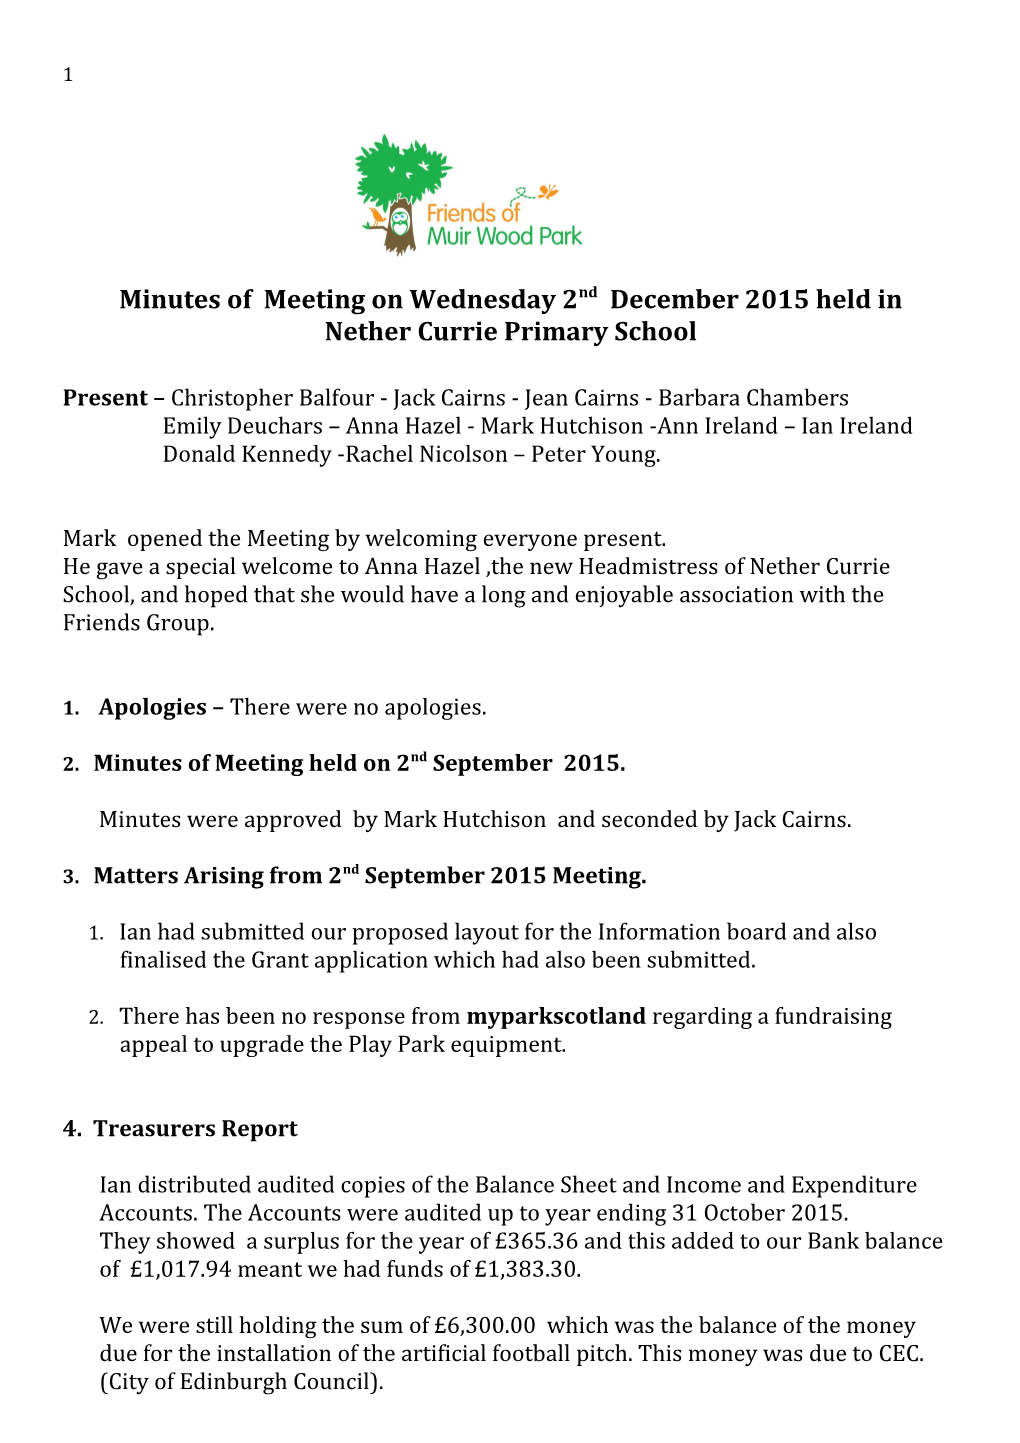 Minutes of Meetingon Wednesday 2Nd December 2015 Held In